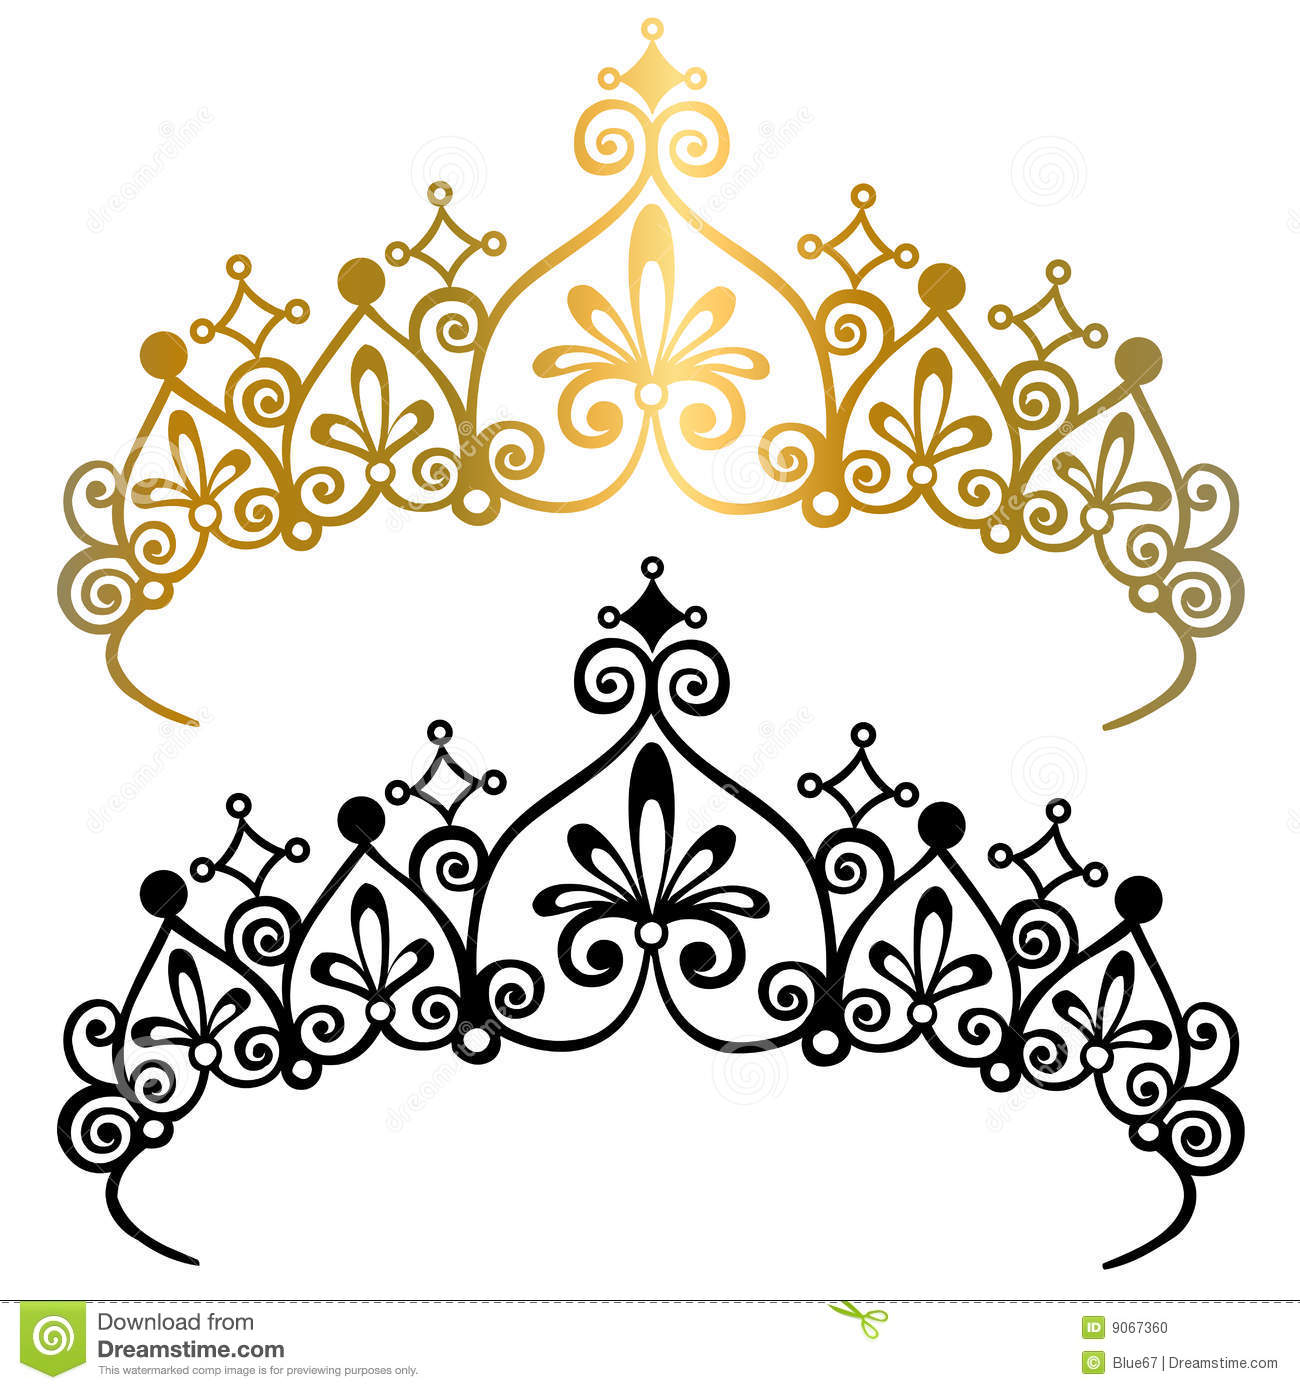 Princess Tiara Crowns Vector Illustration Stock Photo   Image  9067360